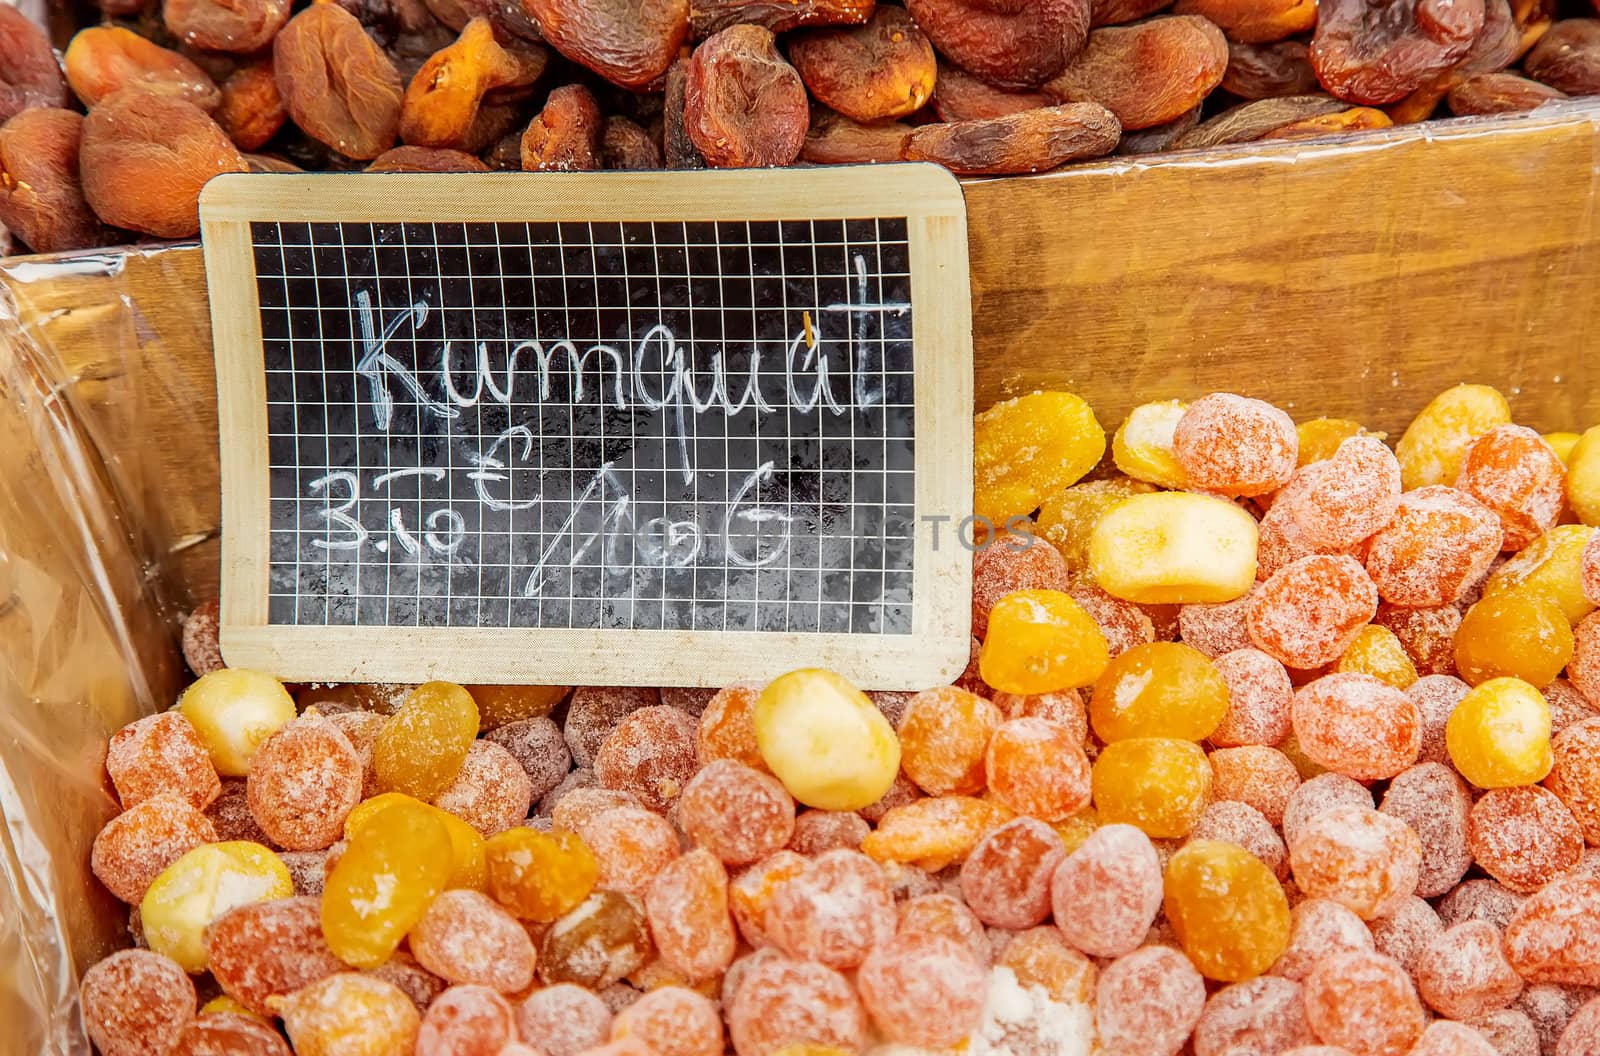 kumquat ("kumquat" in French) at the food market